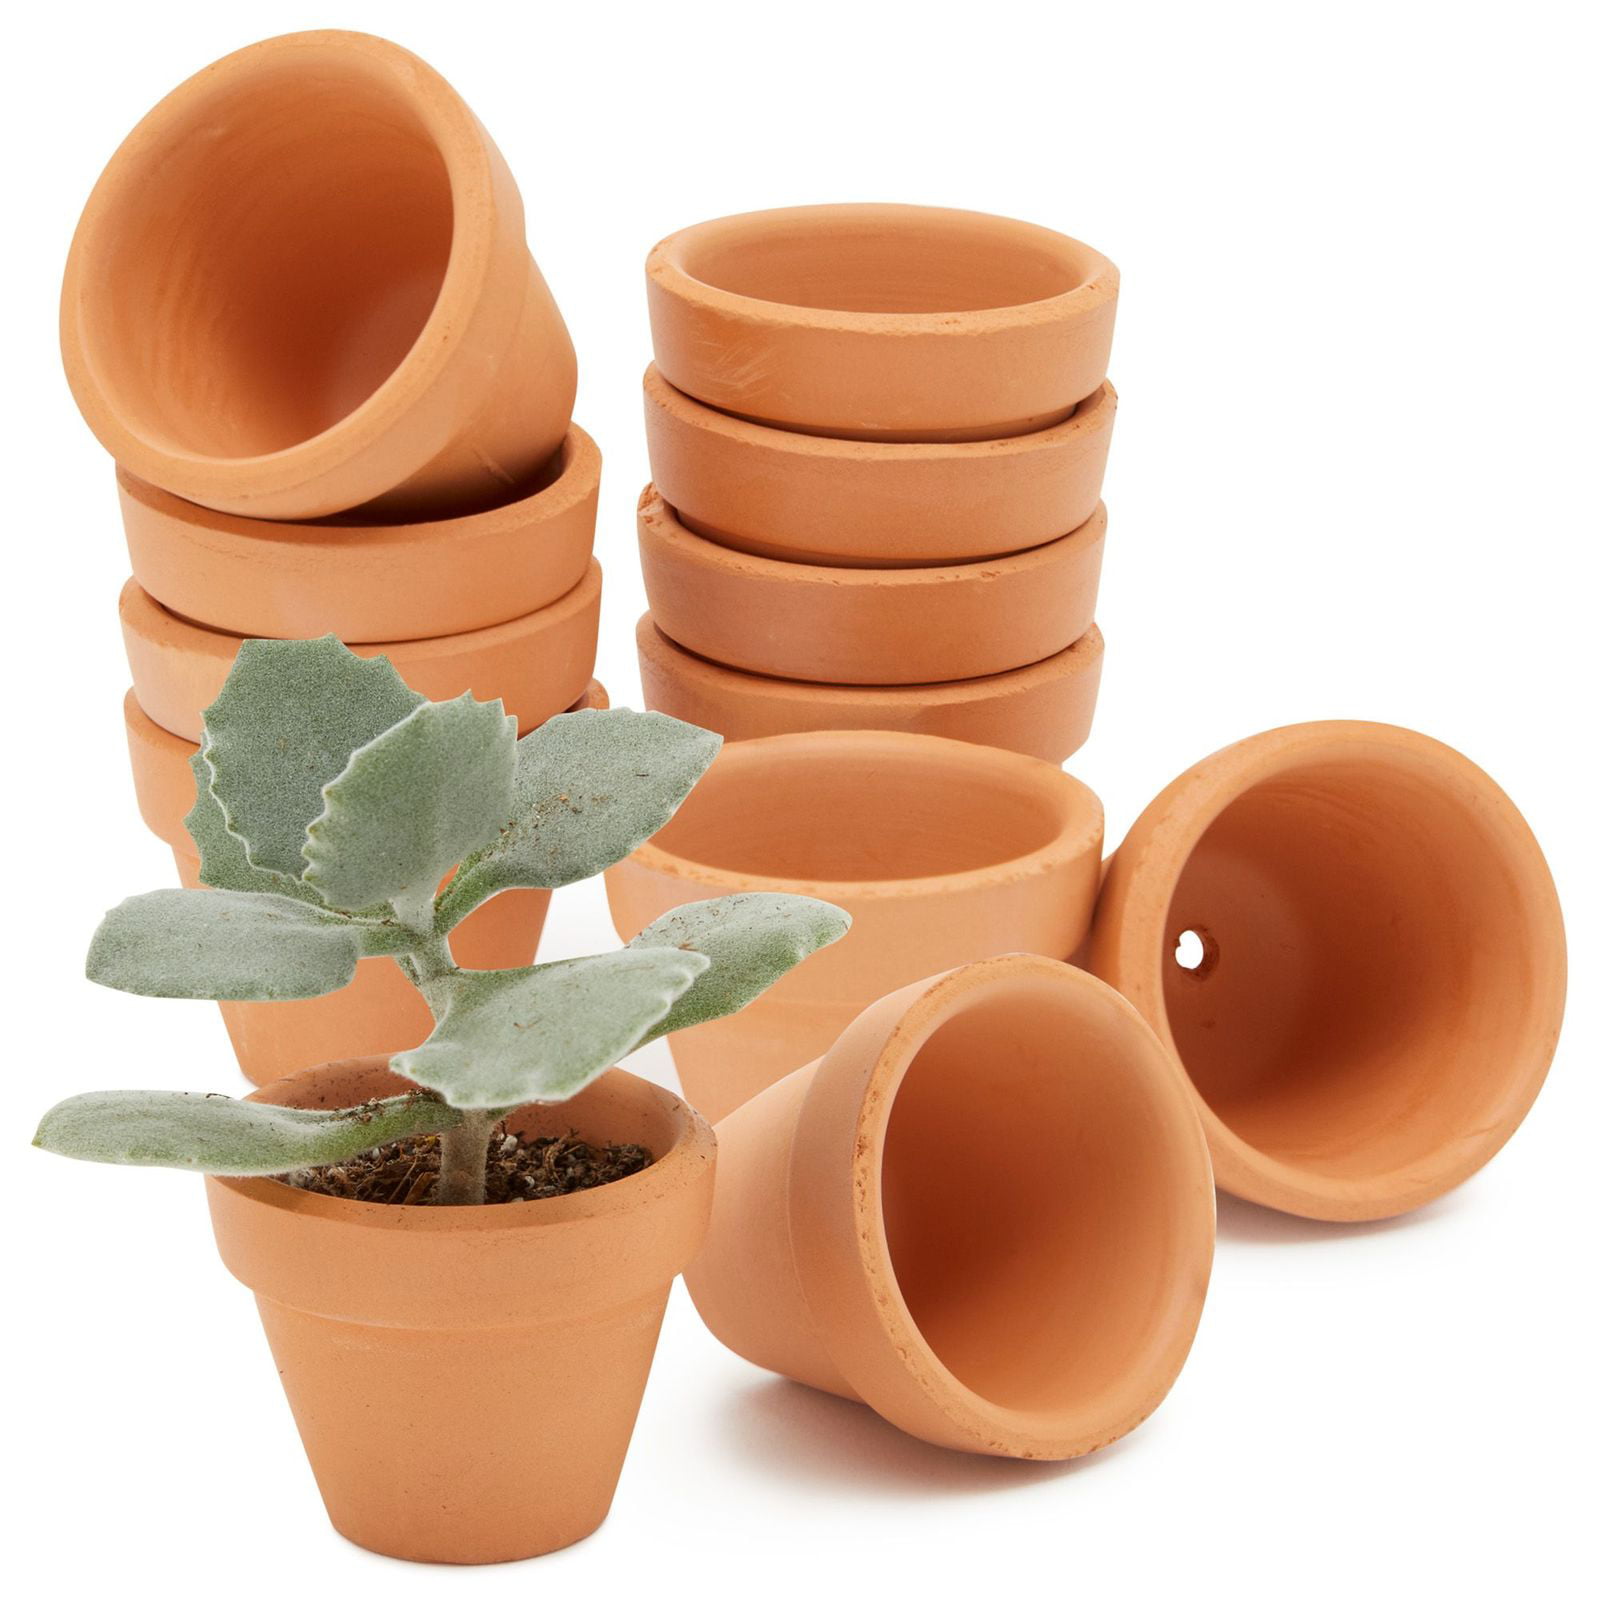 NEW Small Mini Terracotta Pot Clay Ceramic Pottery Planter Flower Garden Pots 